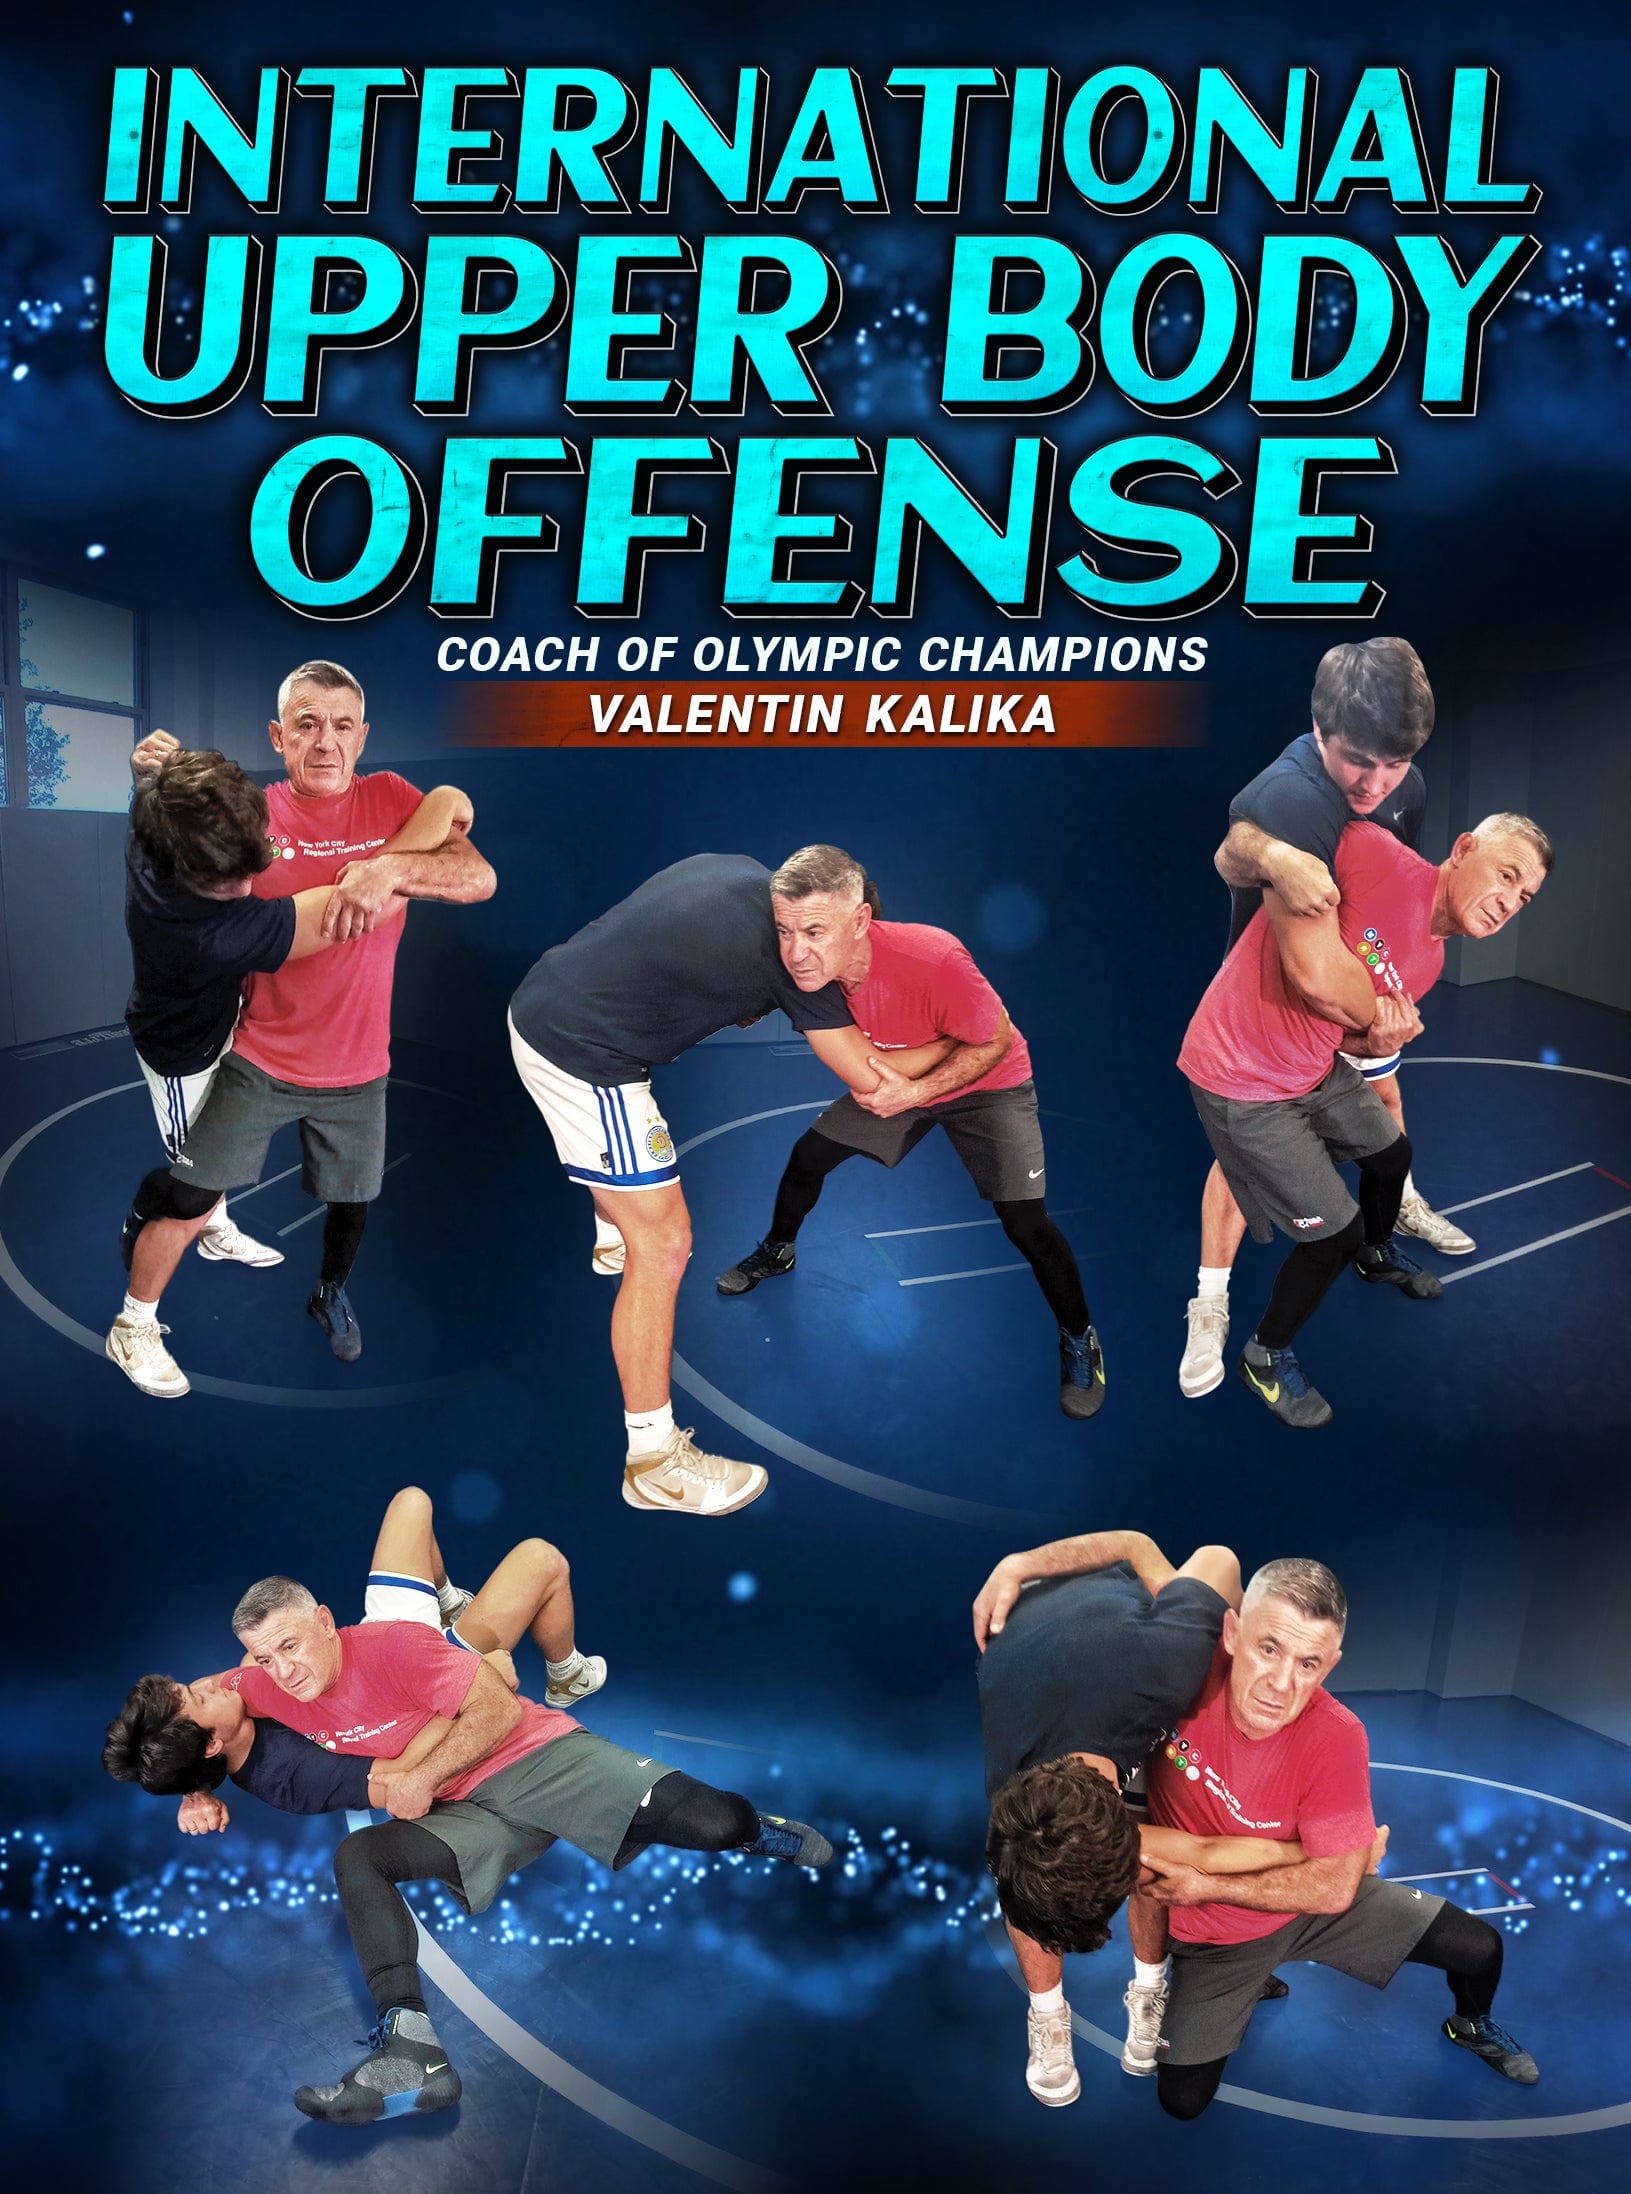 International Upper Body Offense by Valentin Kalika - Fanatic Wrestling